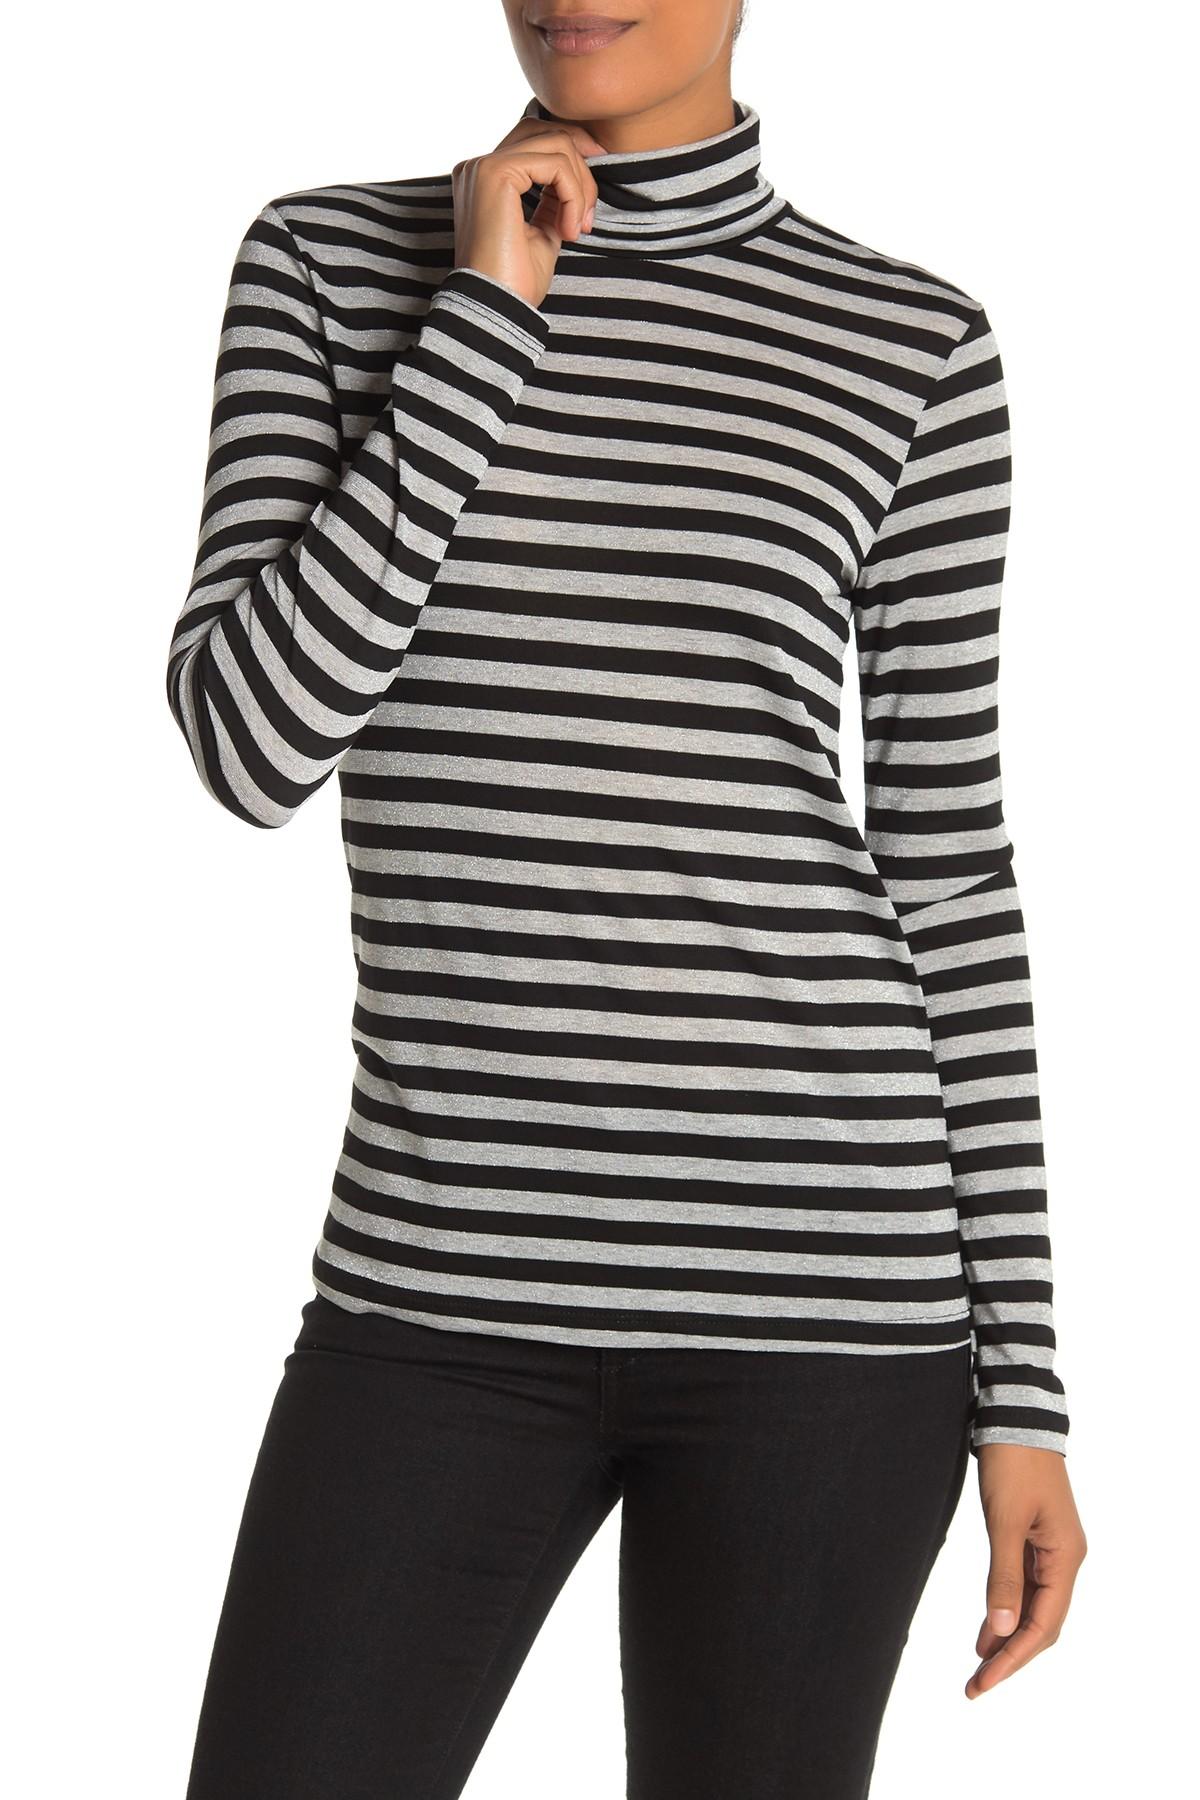 Splendid Stripe Knit Turtleneck in Platinum (Black) - Lyst